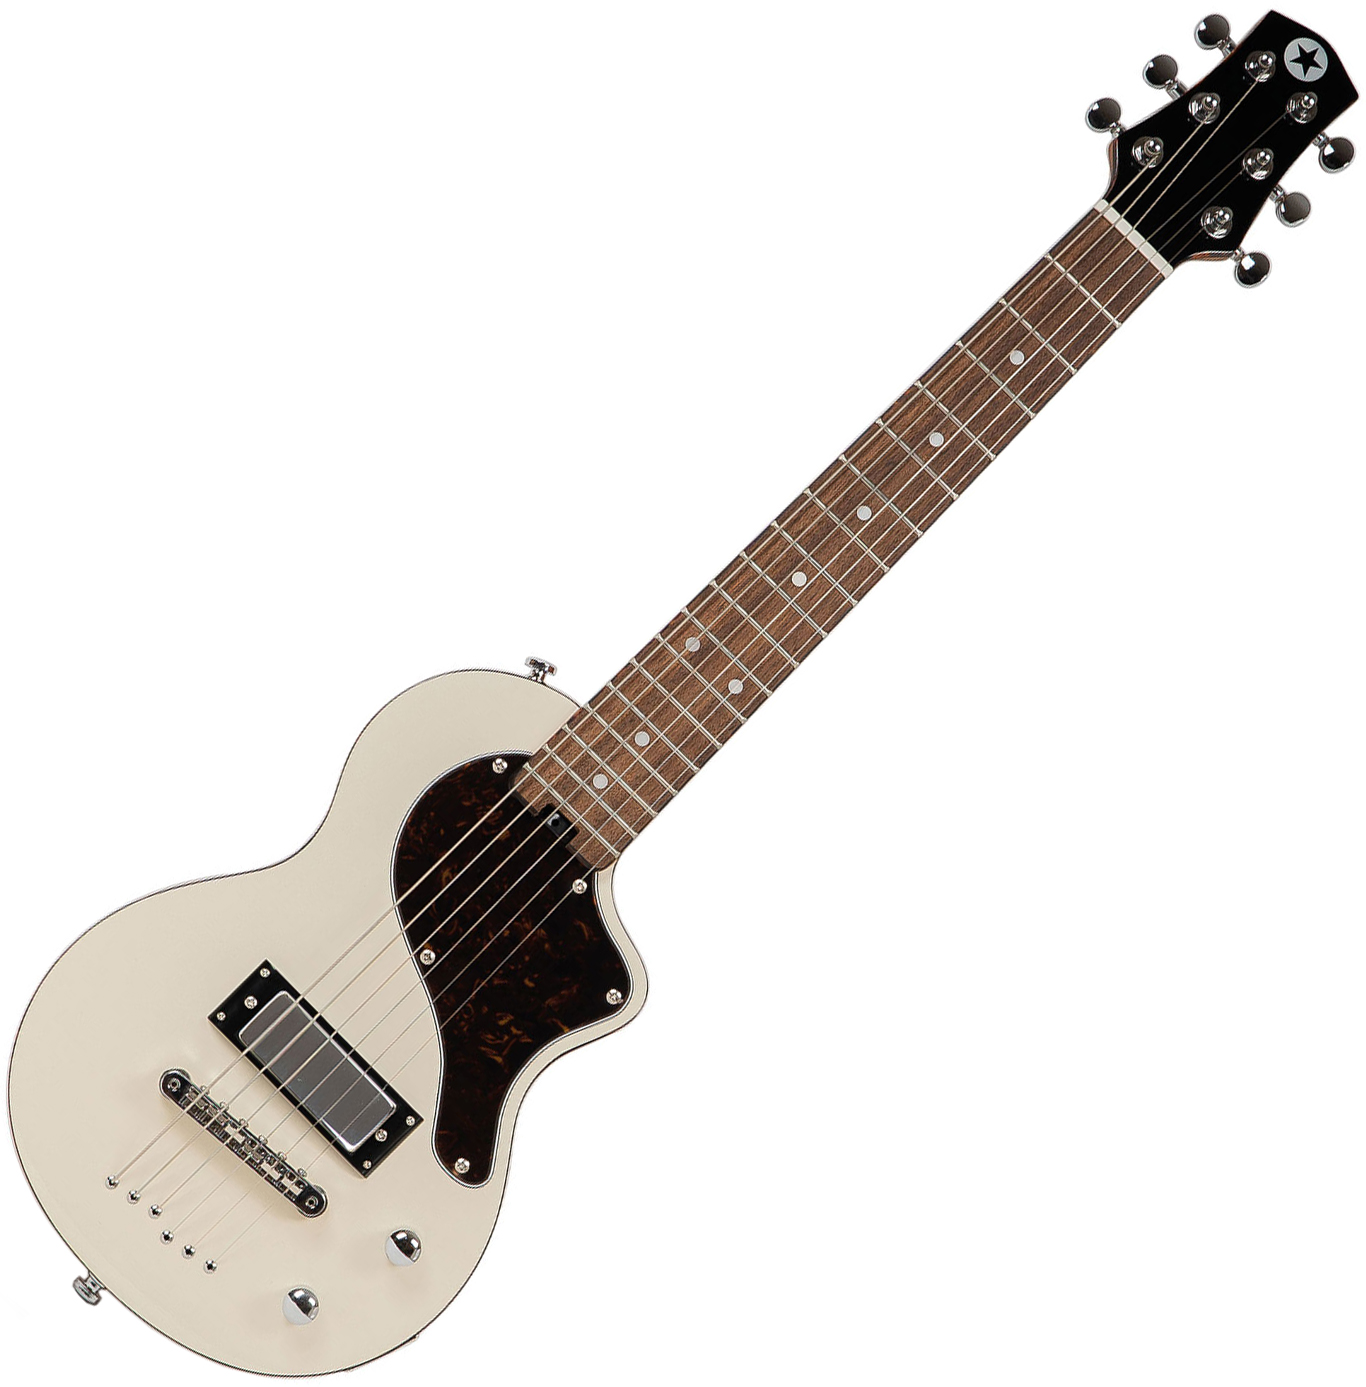 Blackstar Carry-on Travel Guitar Standard Pack +amplug2 Fly +housse - White - Pack Guitare Électrique - Variation 1